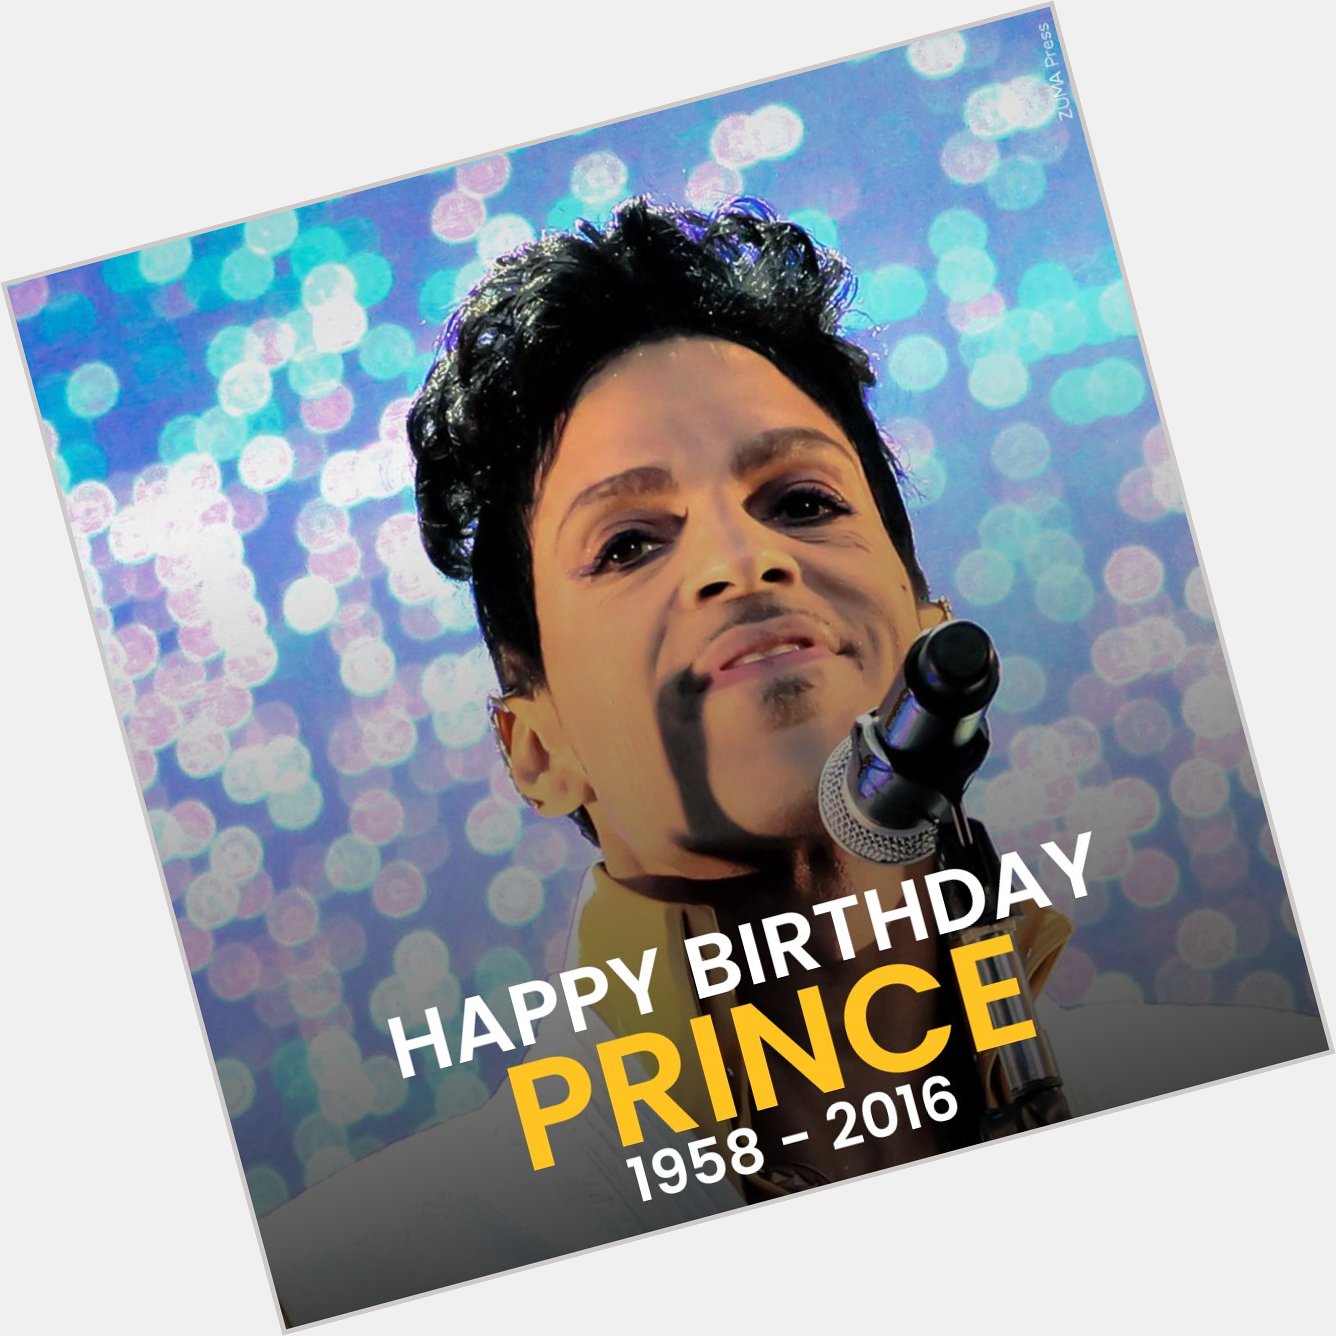 Happy Birthday, Prince 